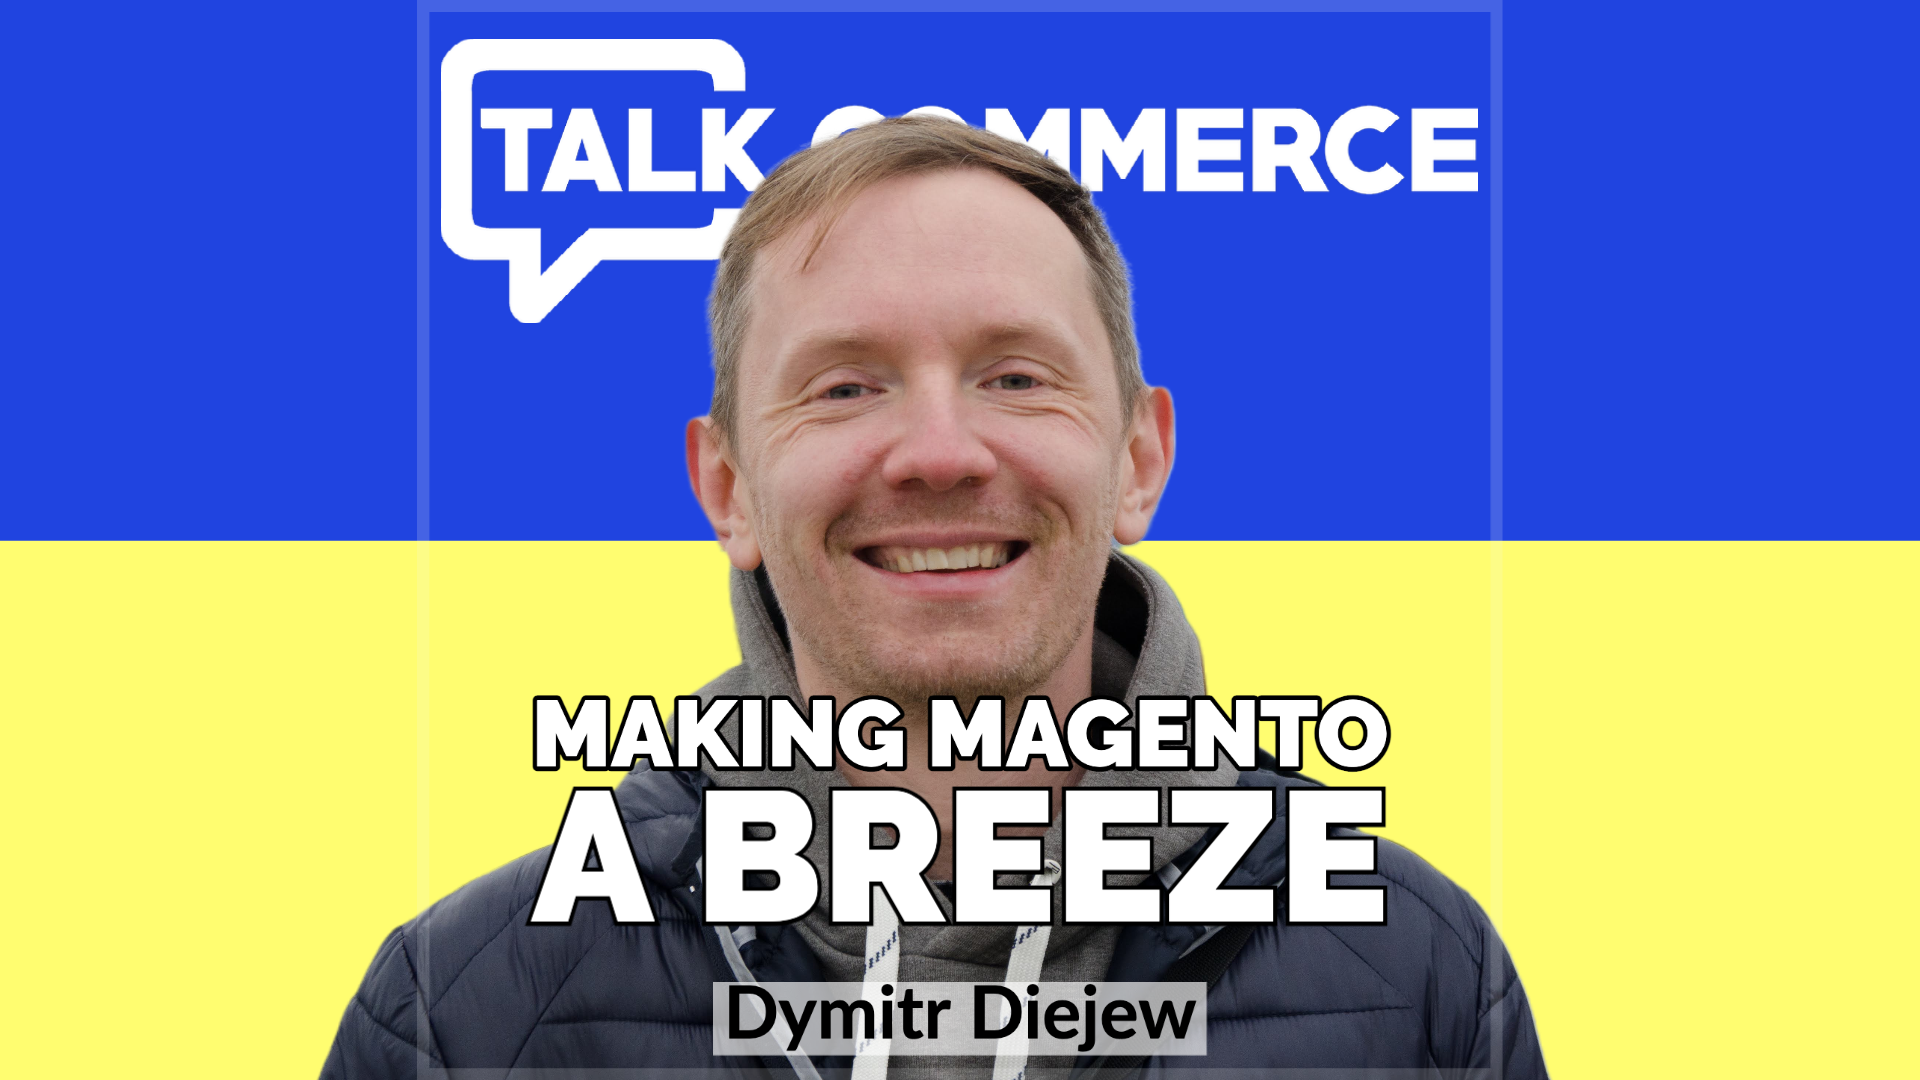 Talk-Commerce Dymitr Diejew